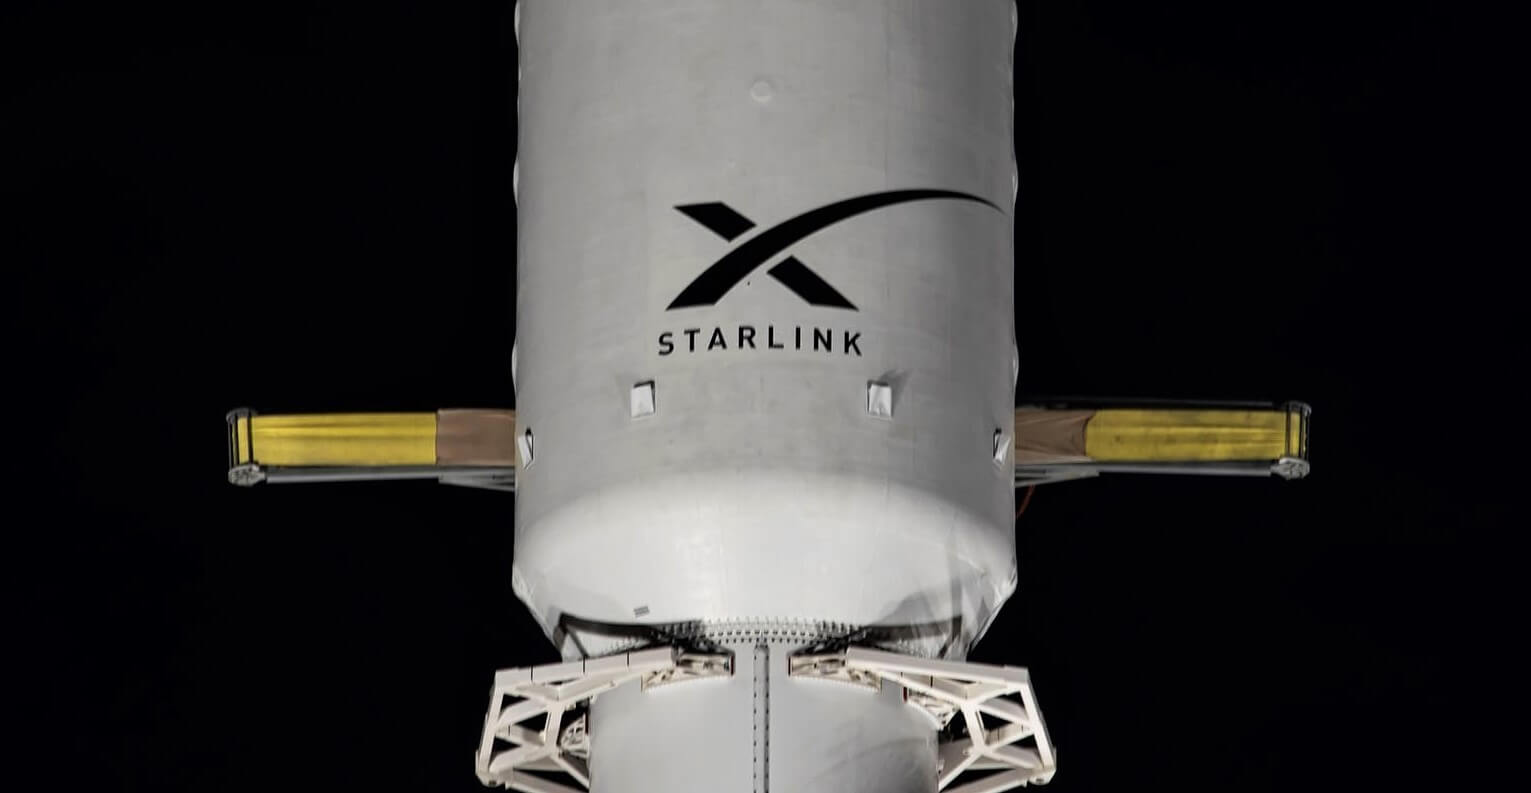 SpaceX寻求星链获得国际蜂窝服务试验的监管许可